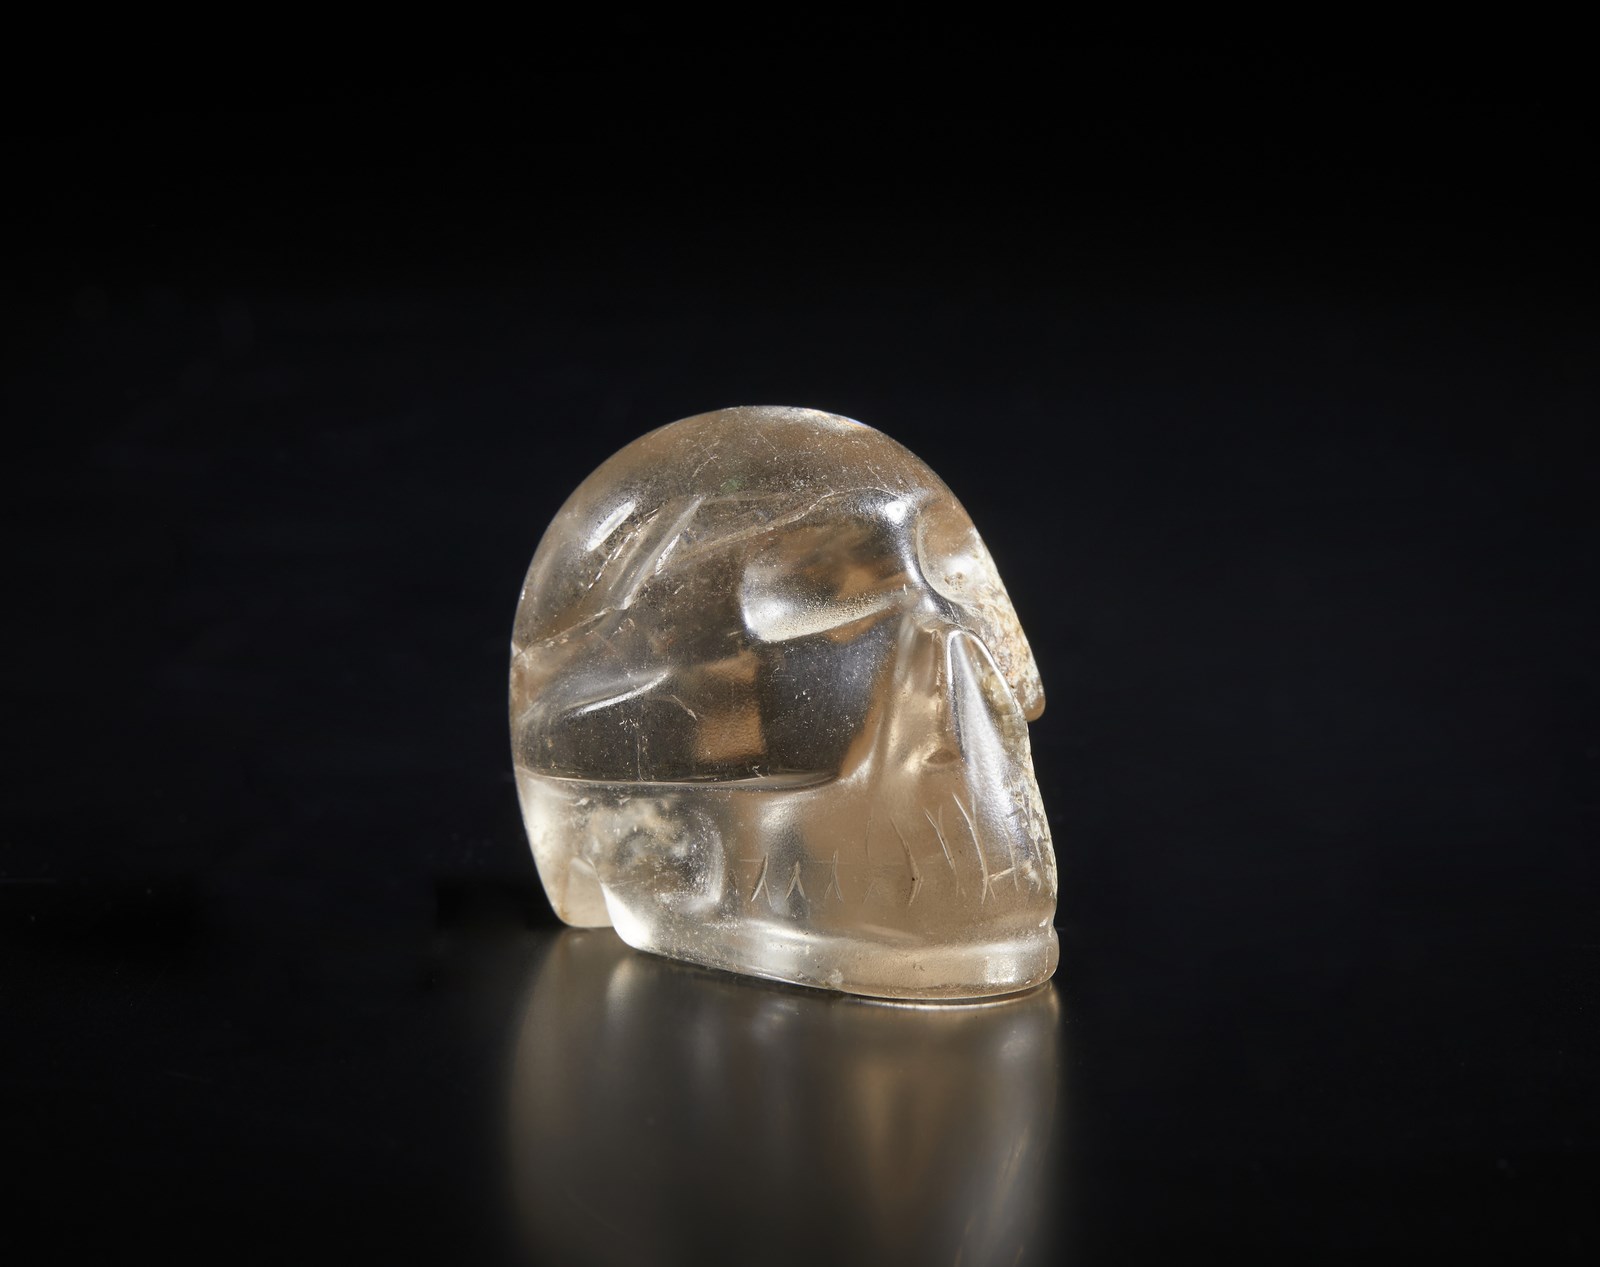 A small rock Crystal vanitas carved as a human skull (. )